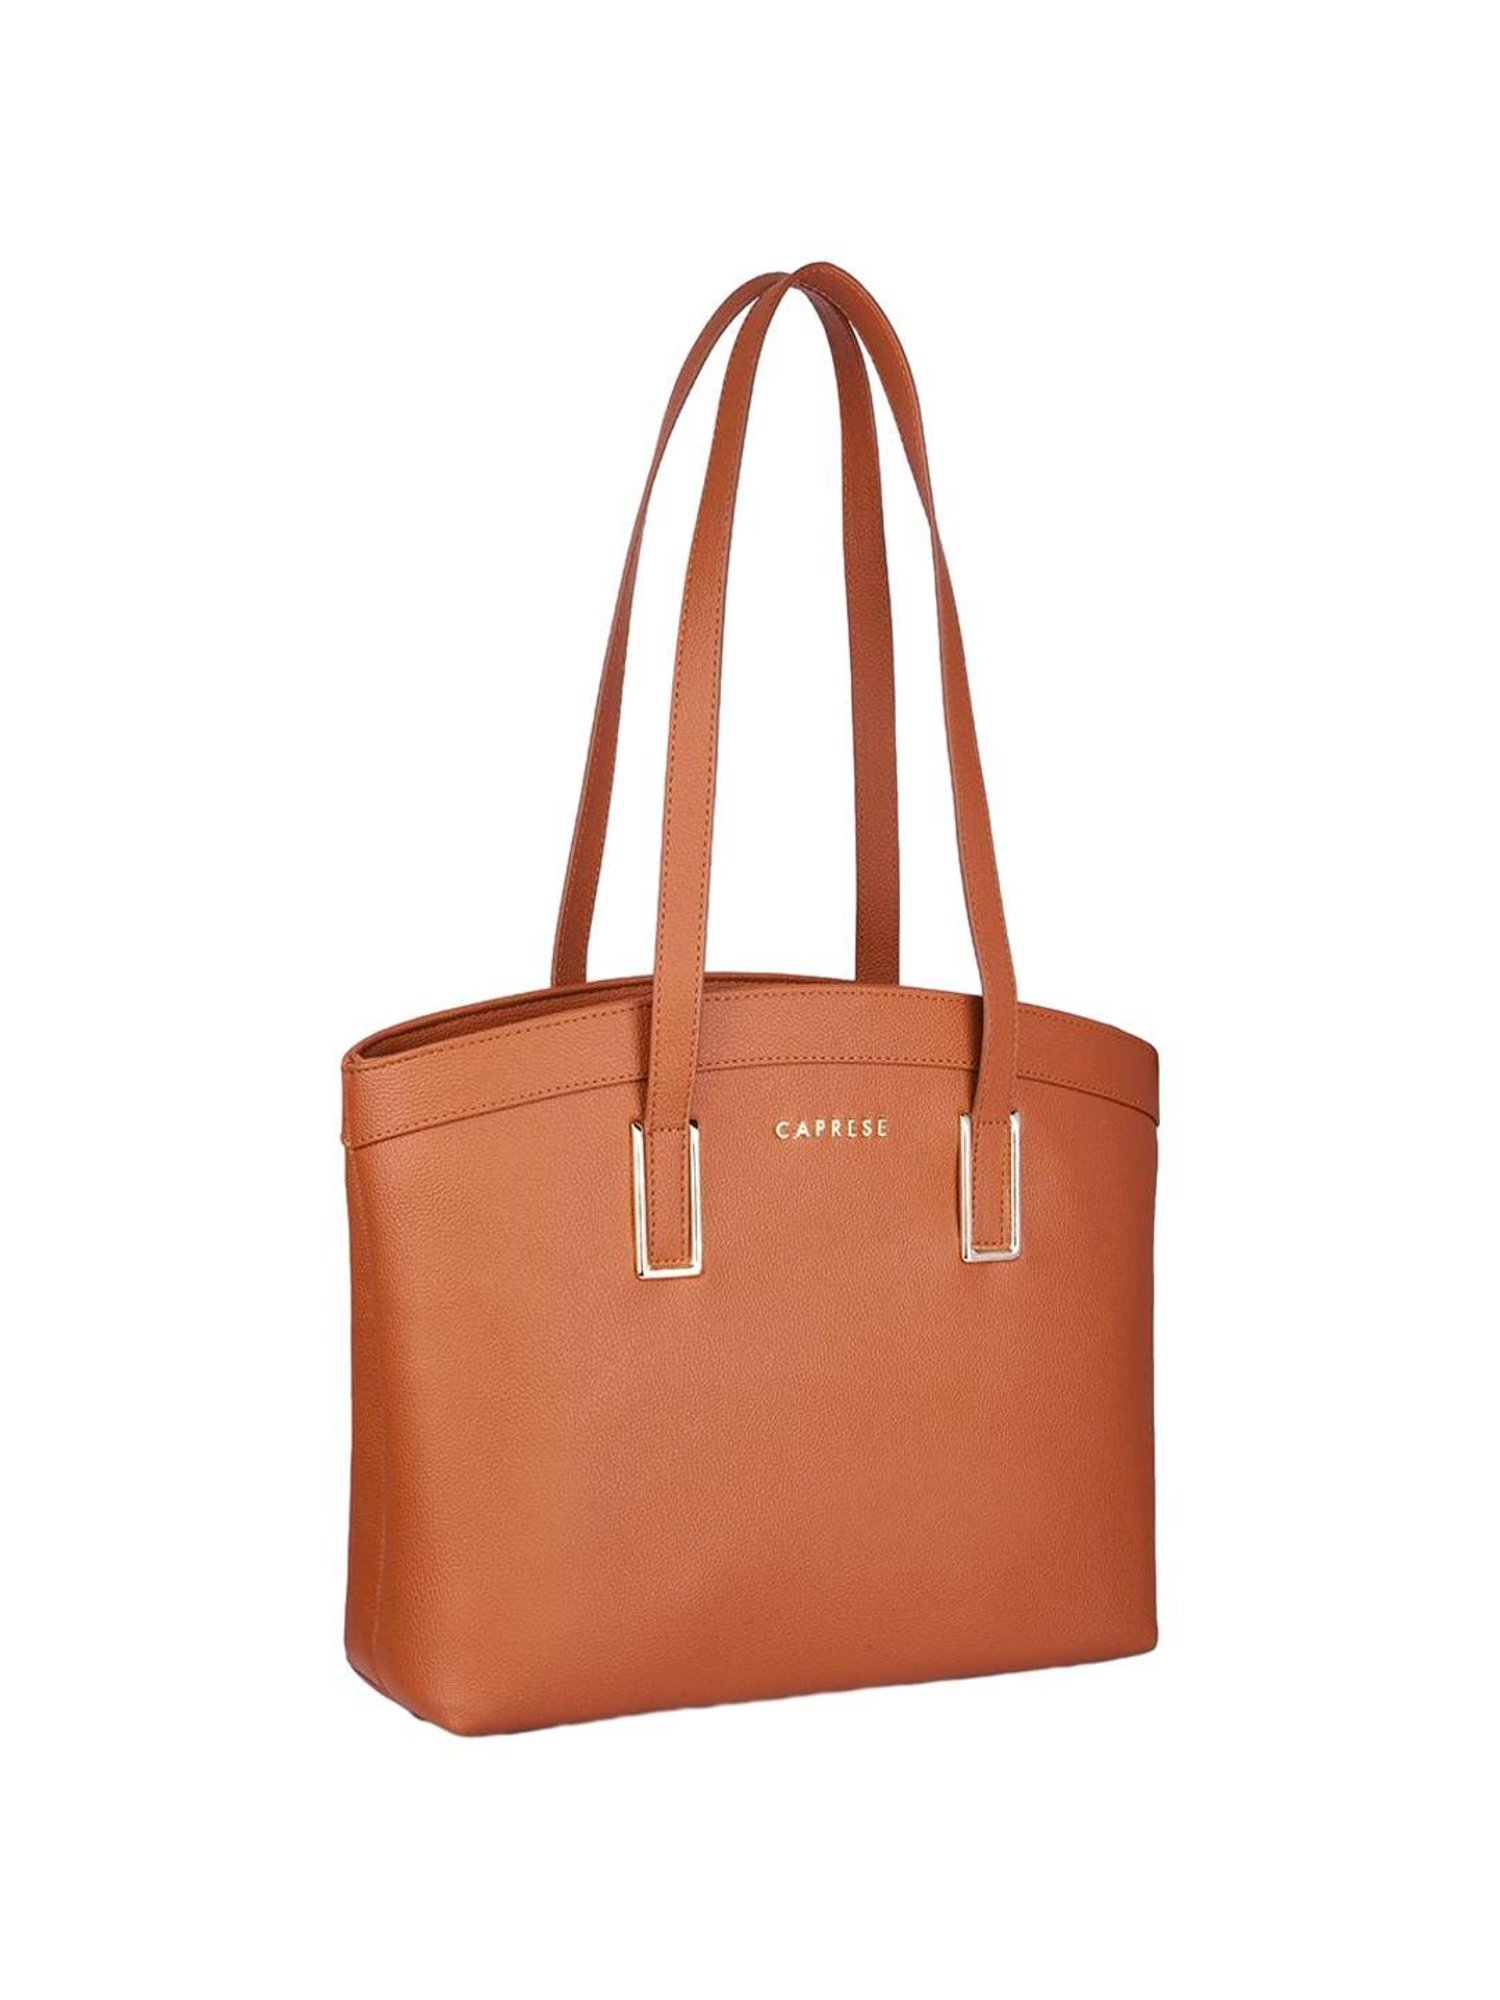 Buy CAPRESE Tan Zipper Clouser Cora Faux Leather Women Formal Wear Tote  Handbag